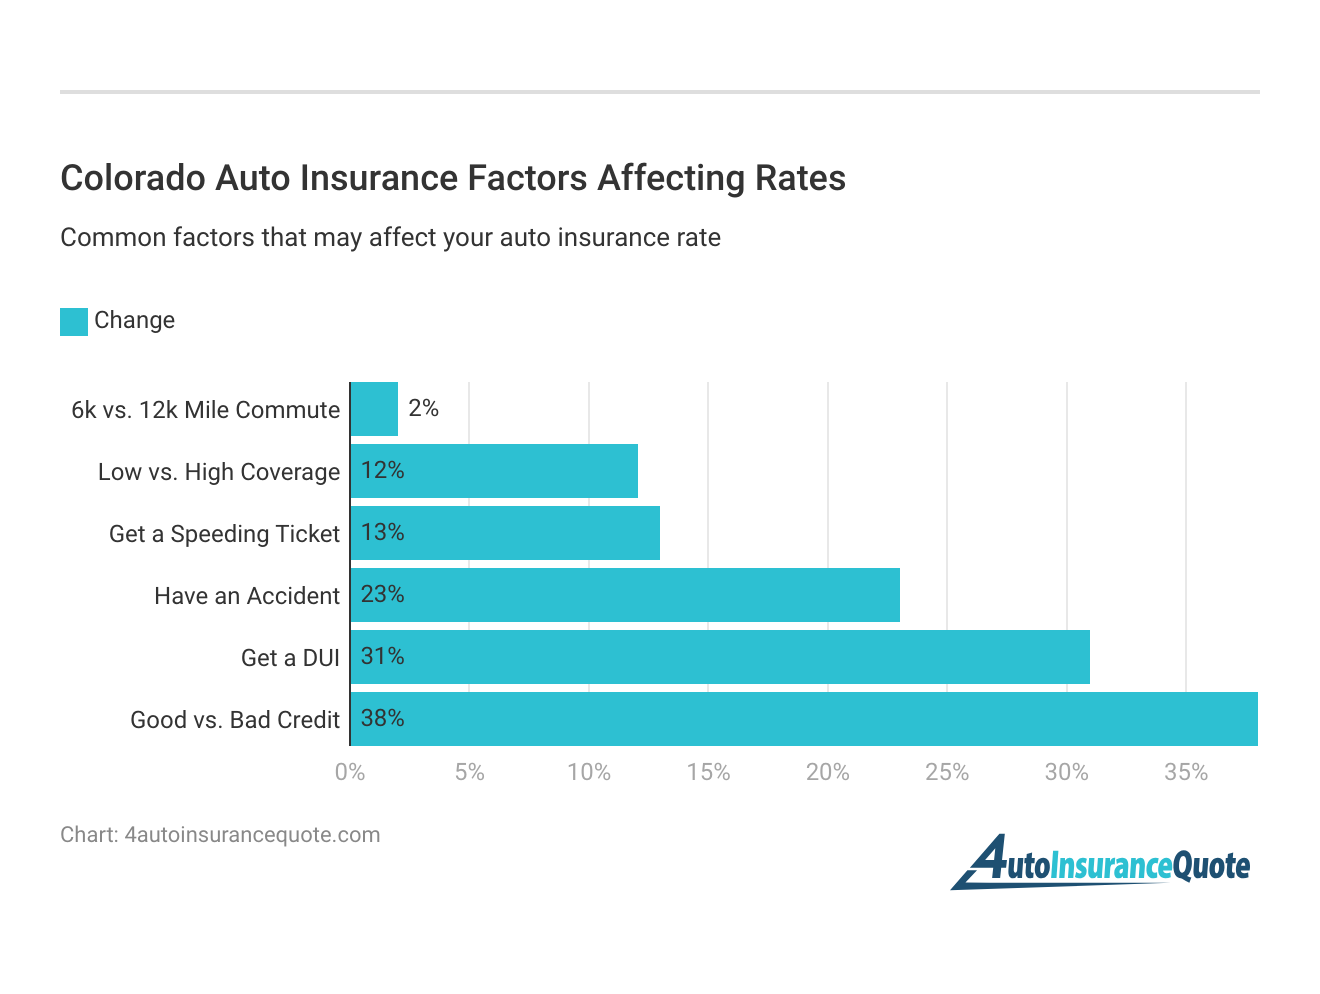 <h3>Colorado Auto Insurance Factors Affecting Rates</h3>